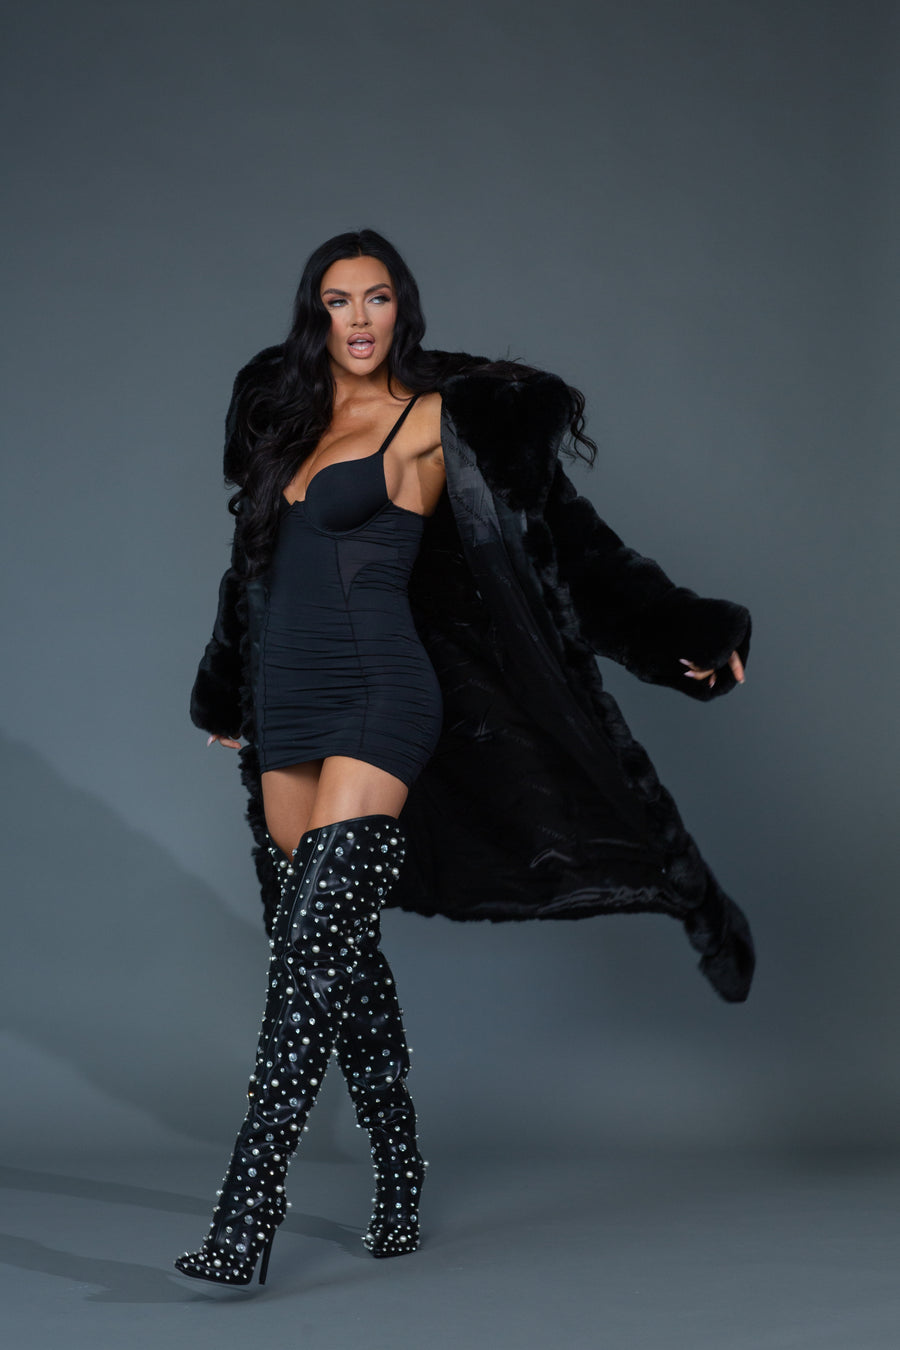 Model posing while wearing black faux fur trench coat